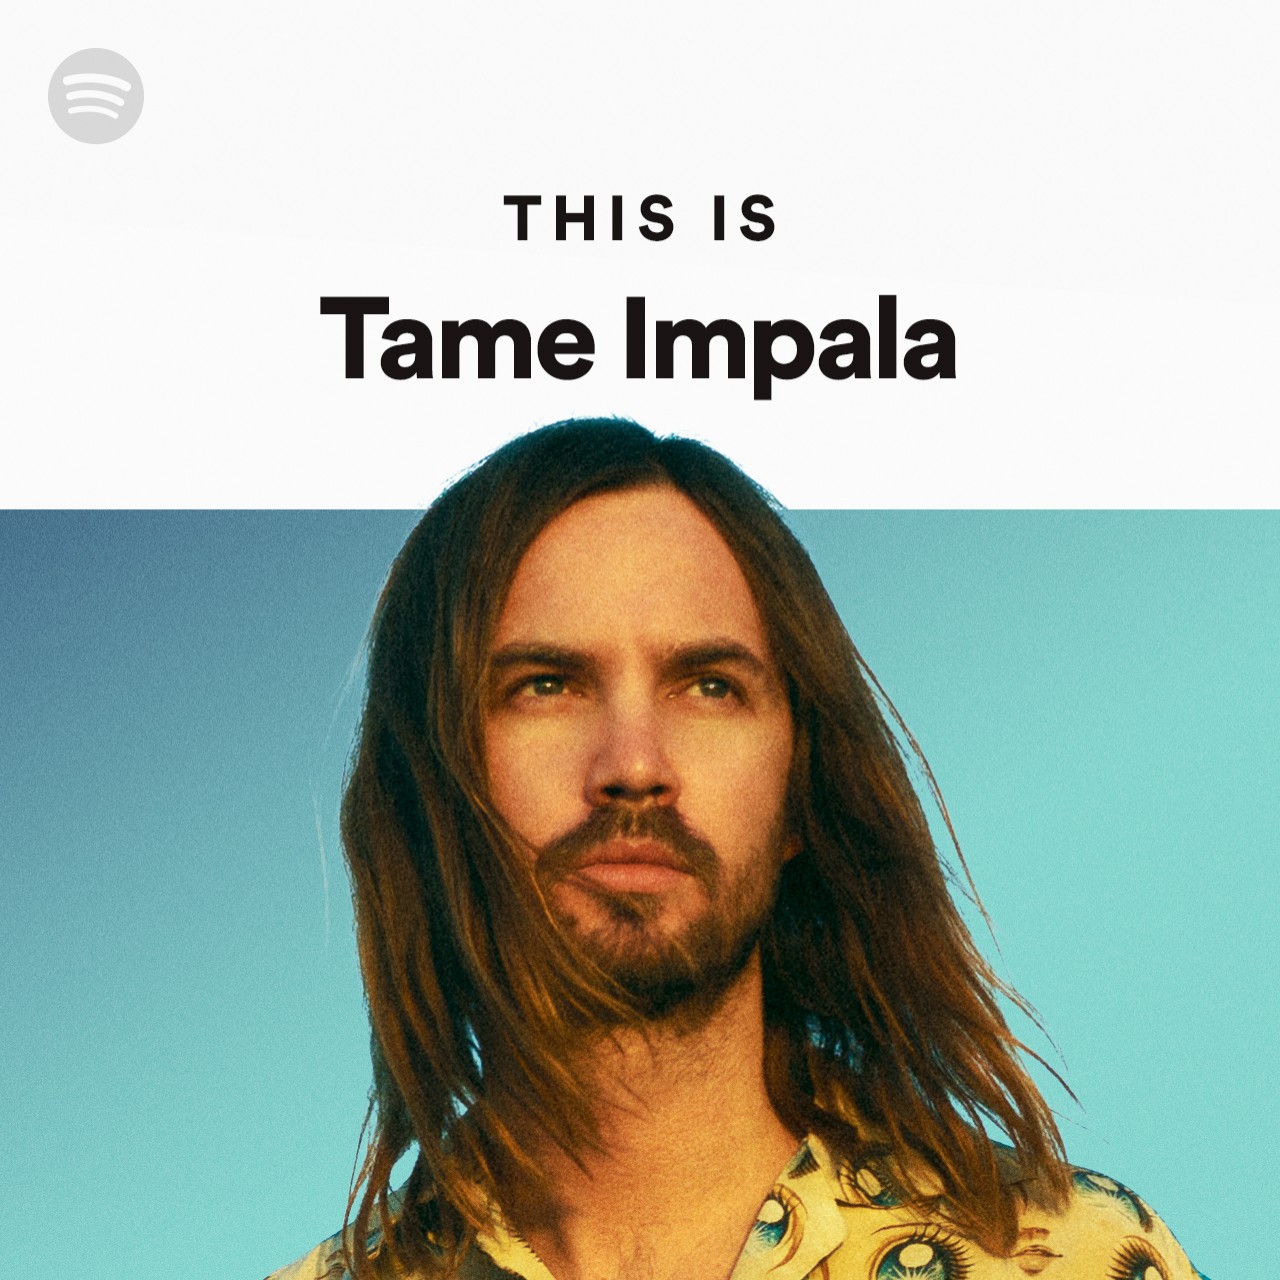 tame impala let it happen guitar riff timestamp spotify